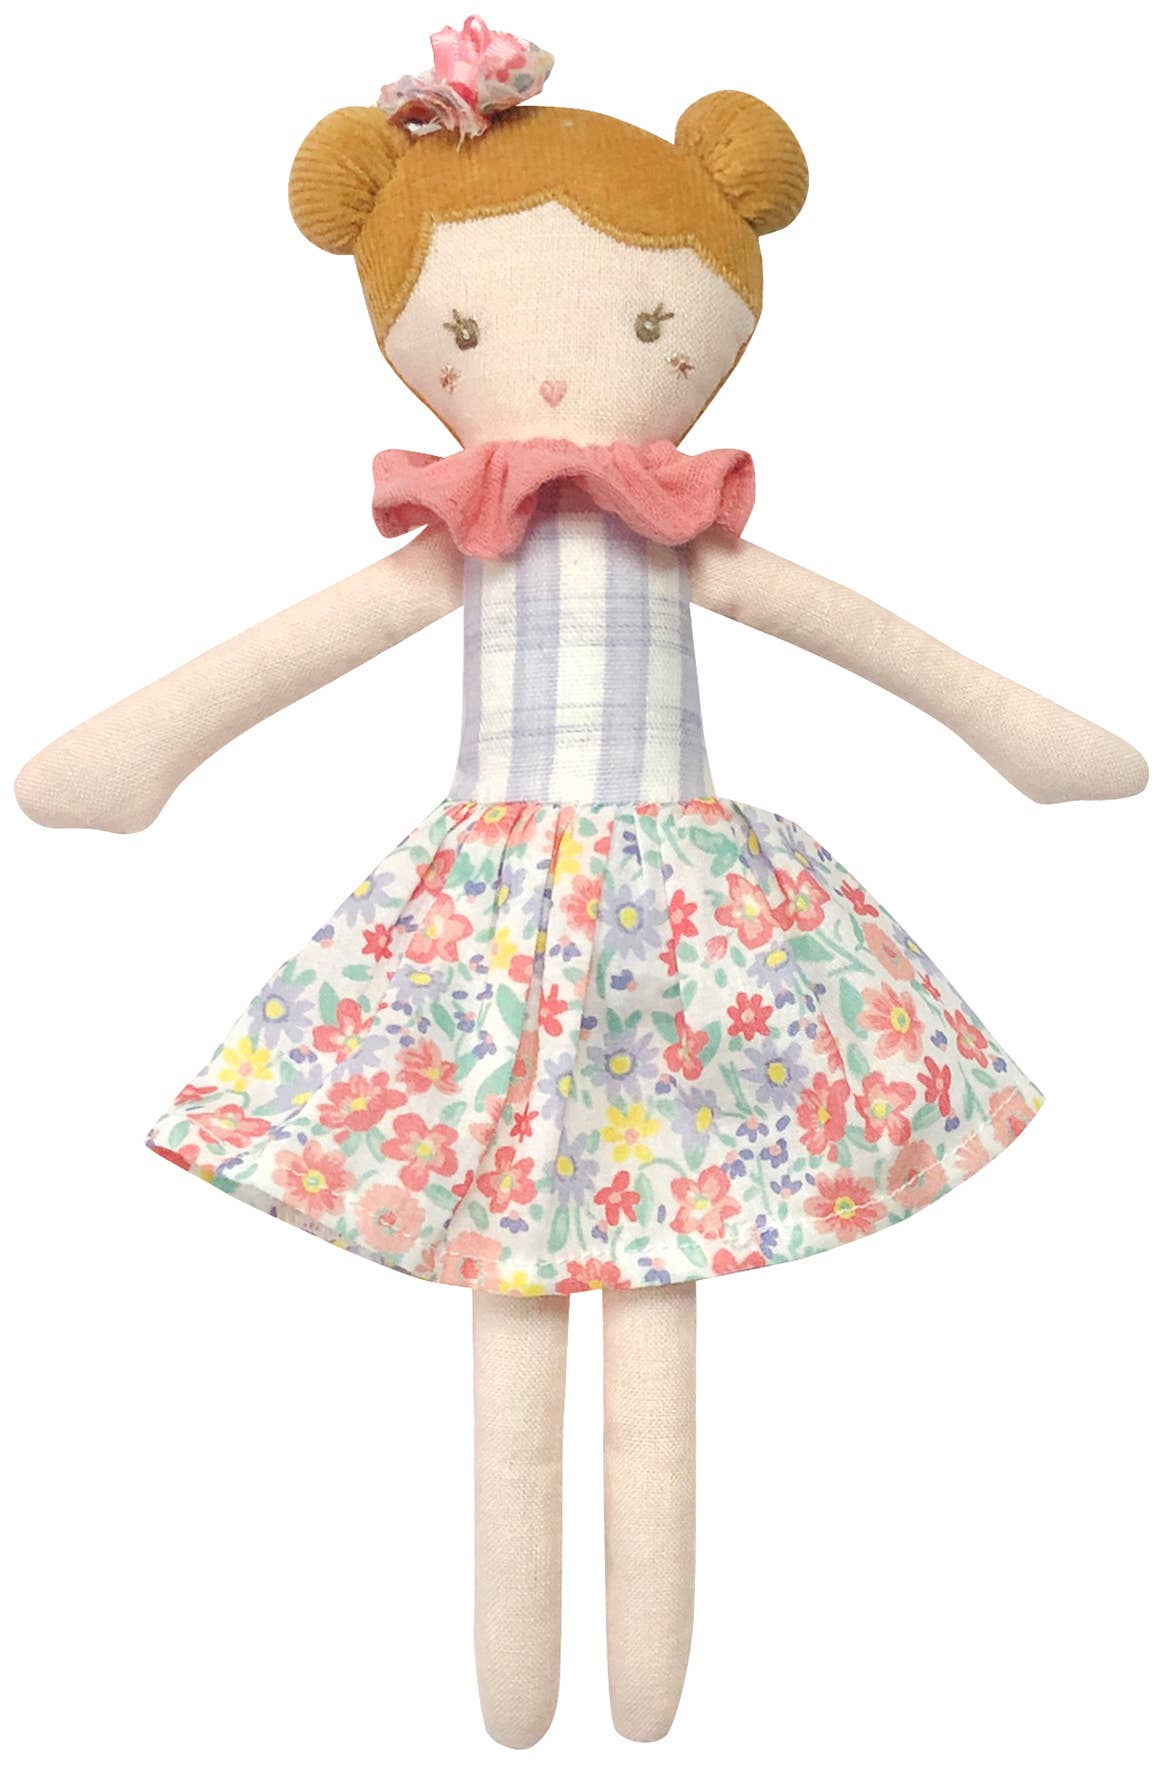 Laurie Flower
Linen Doll